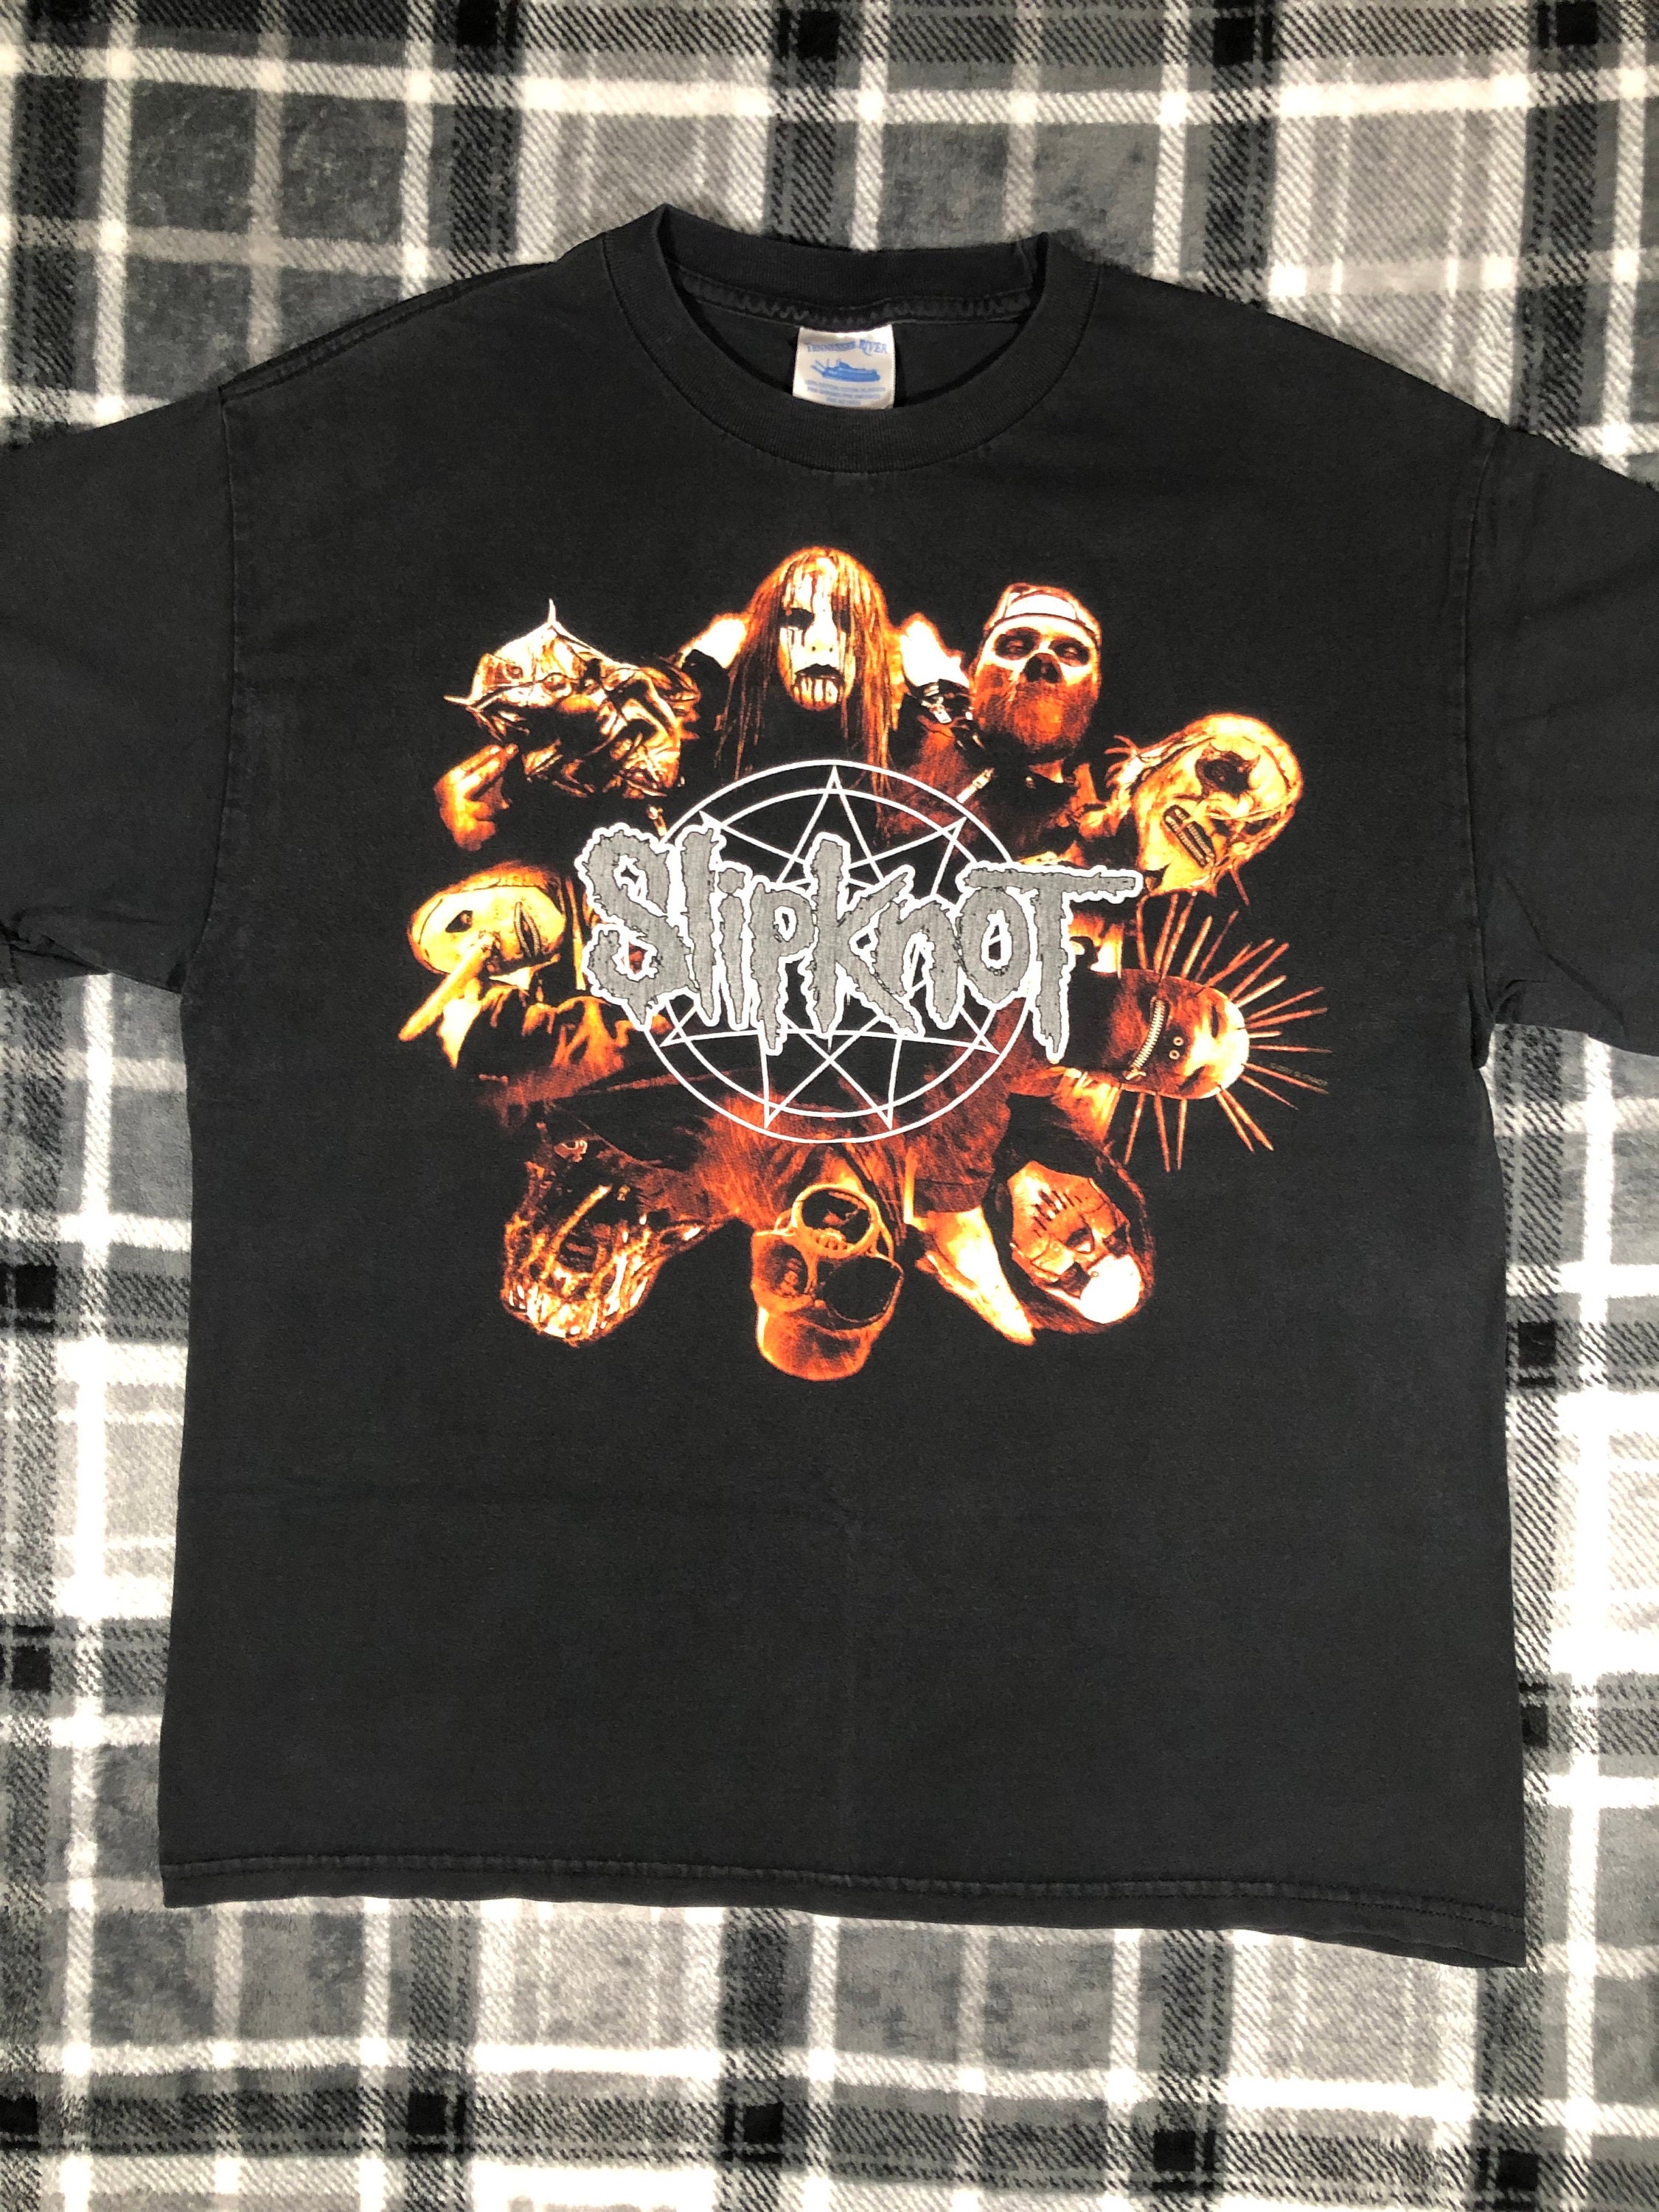 Slipknot Vintage 2001 Iowa Hardcore Metal Band Album T Shirt Size